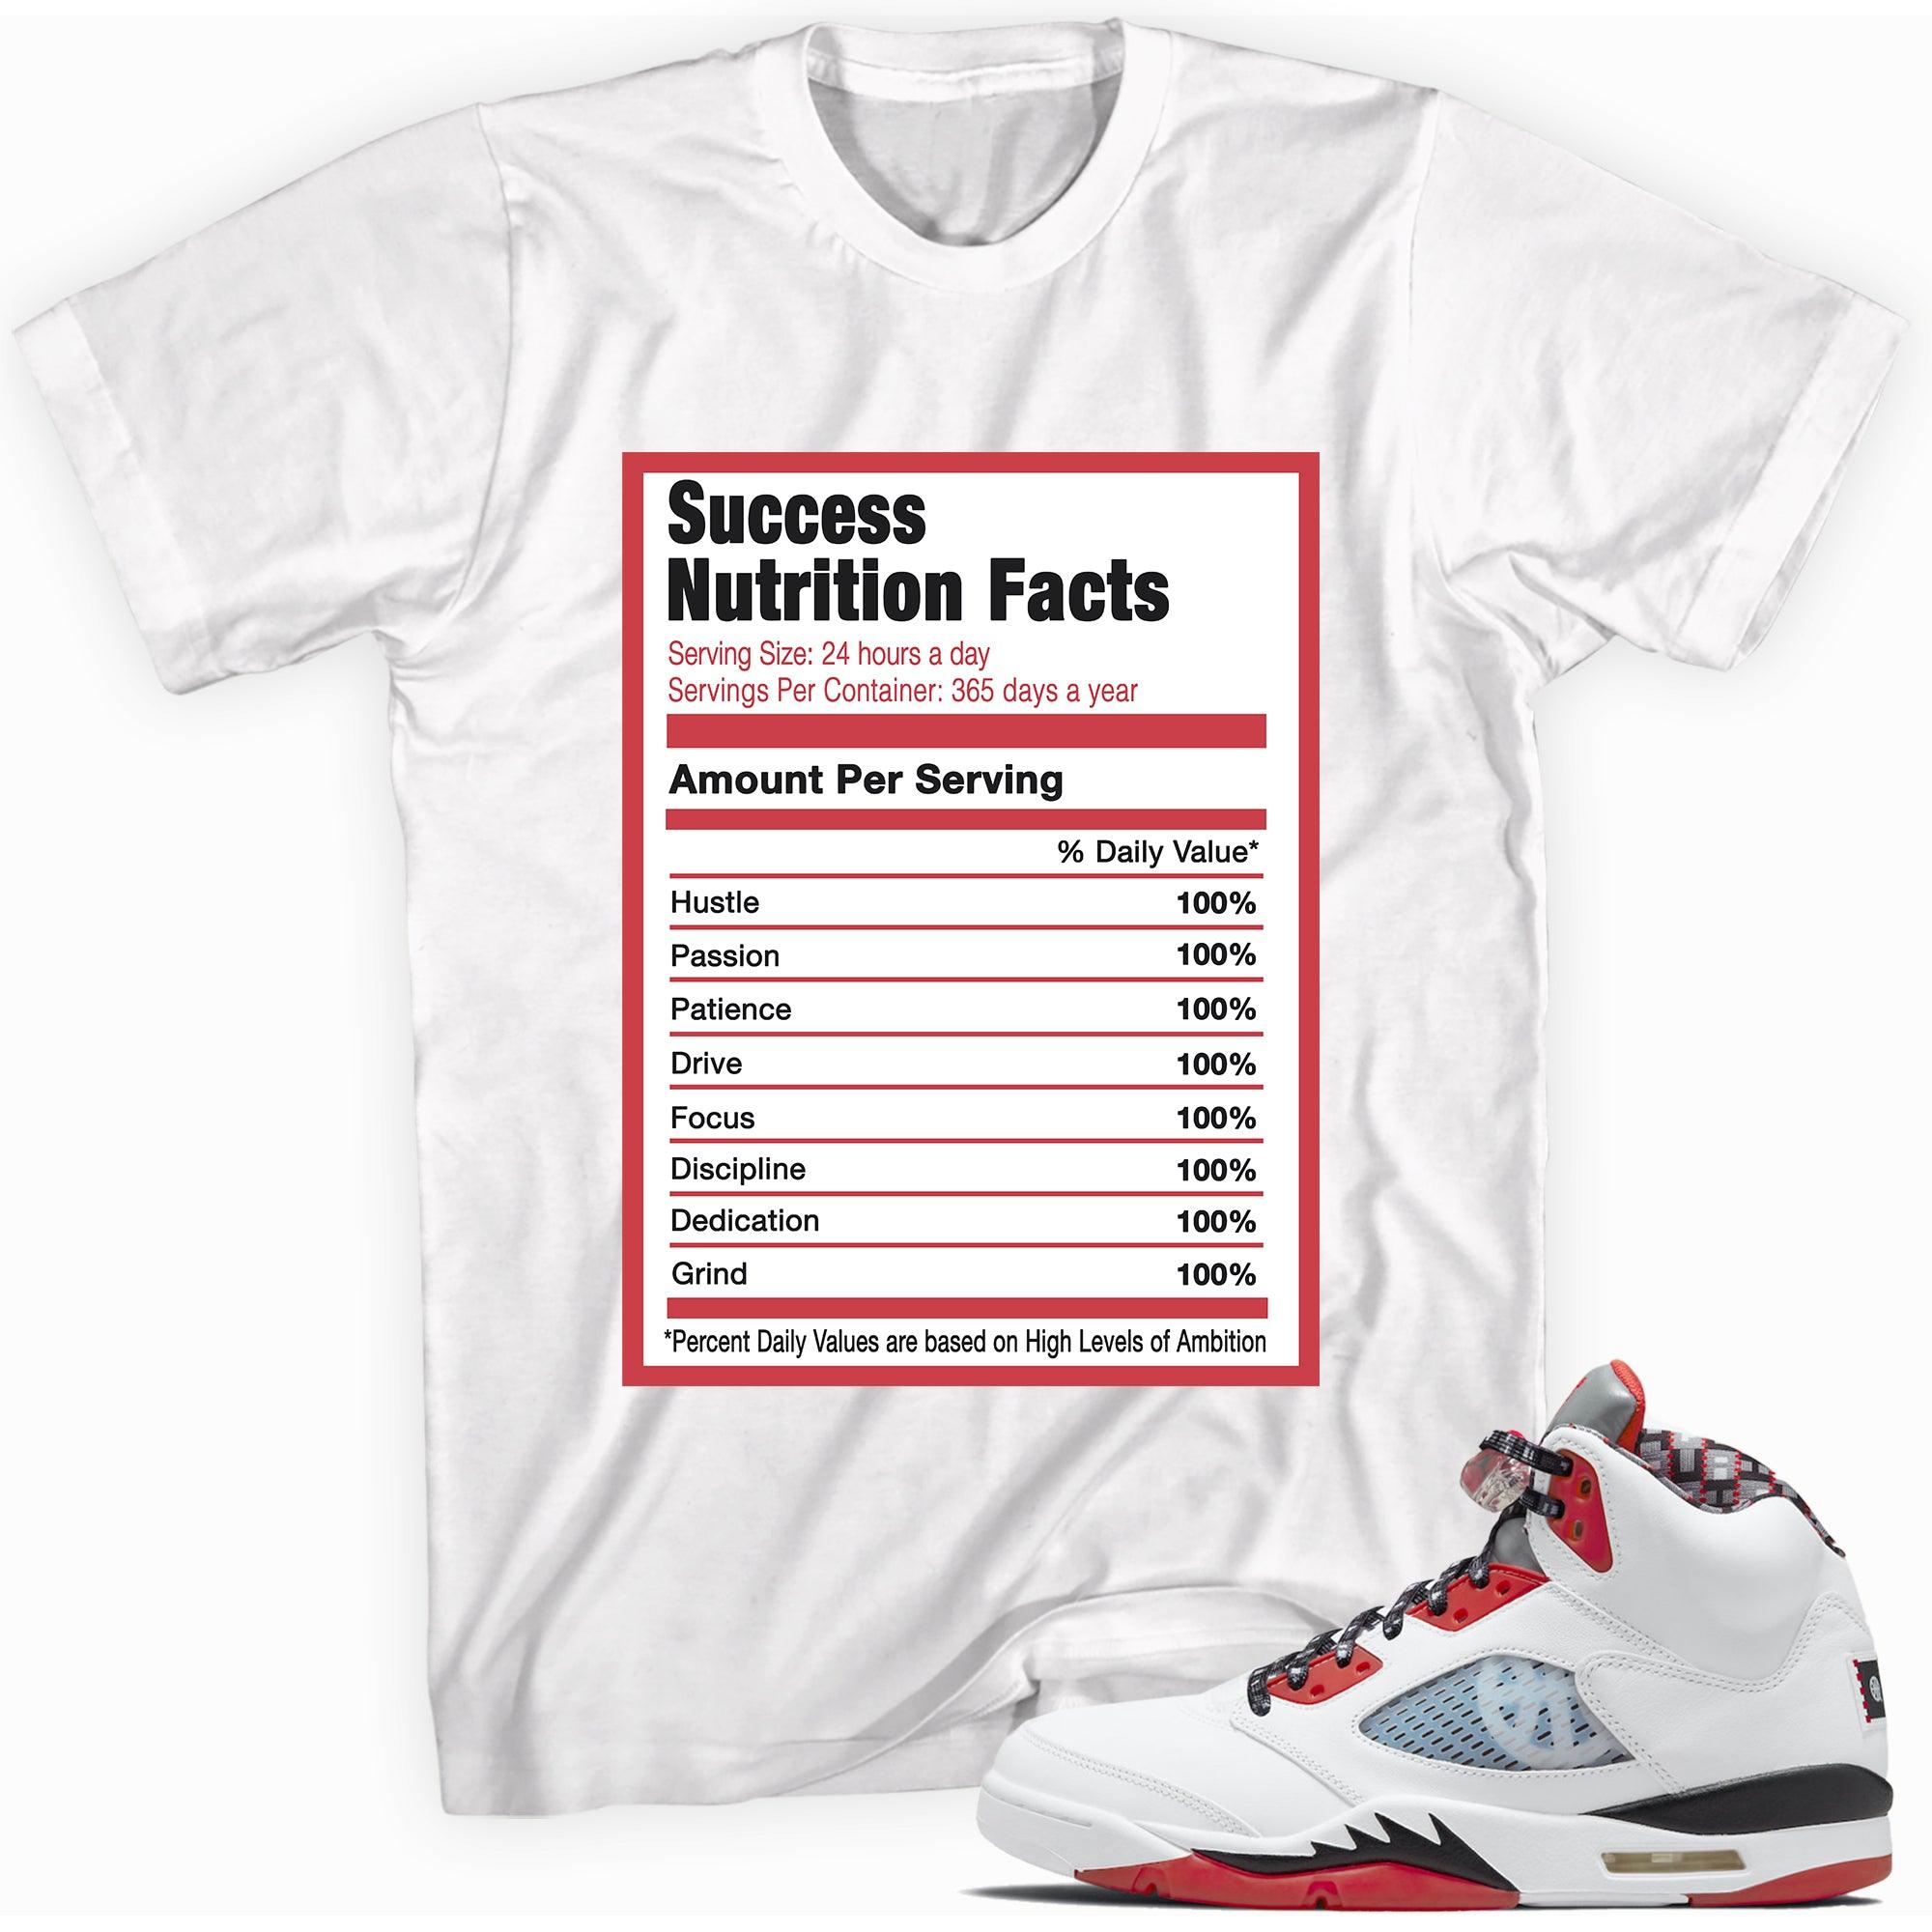 Success Nutrition Facts Sneaker Tee AJ 5 Retro Quai 54 photo